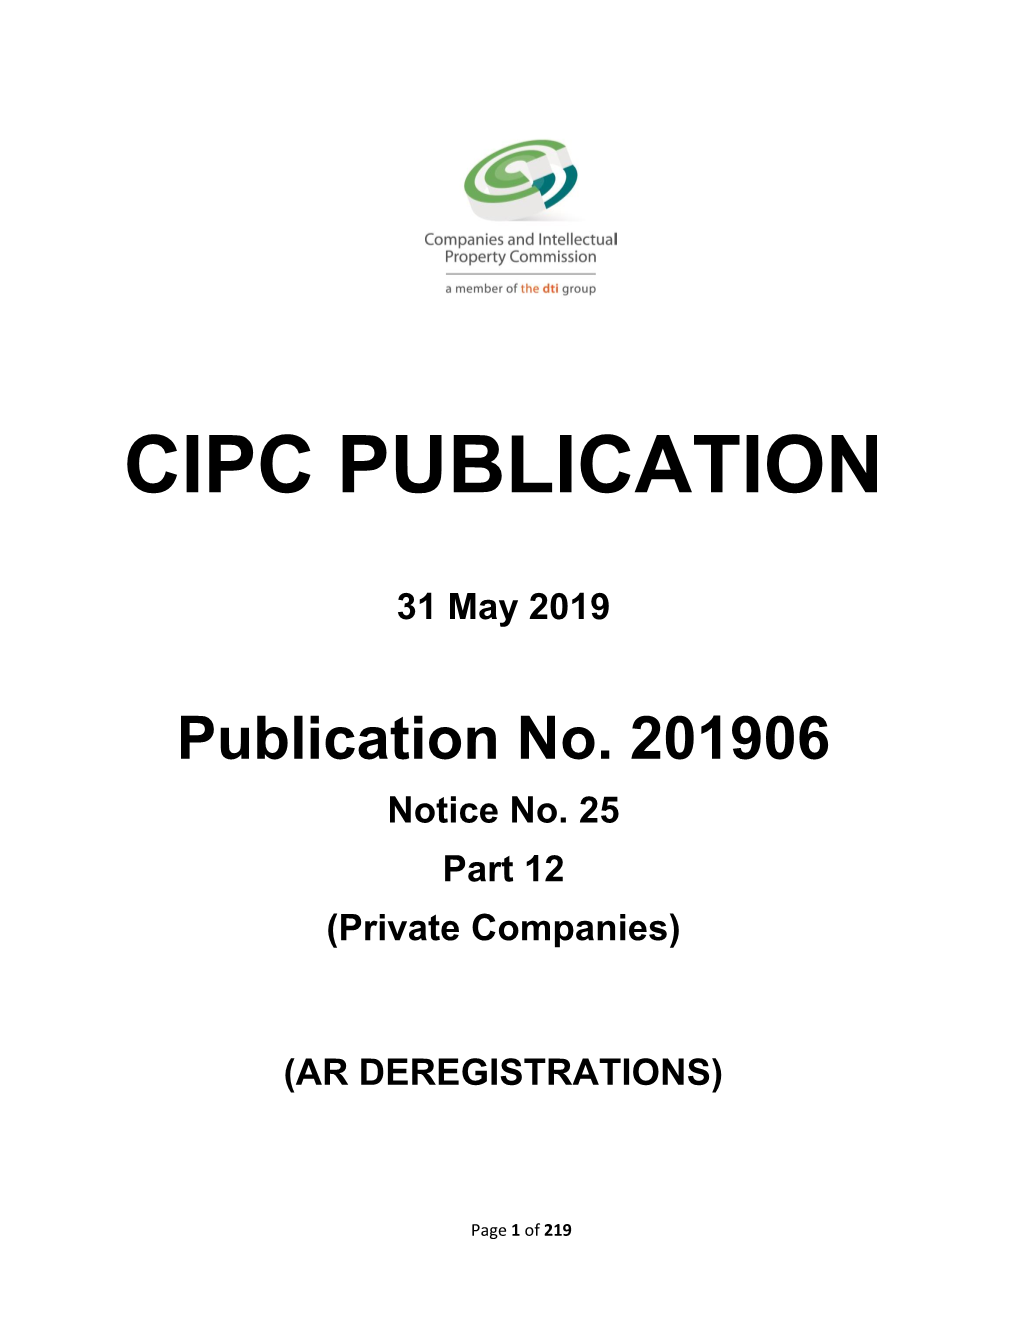 Publication No. 201906 Notice No. 25 Part 12 (Private Companies)